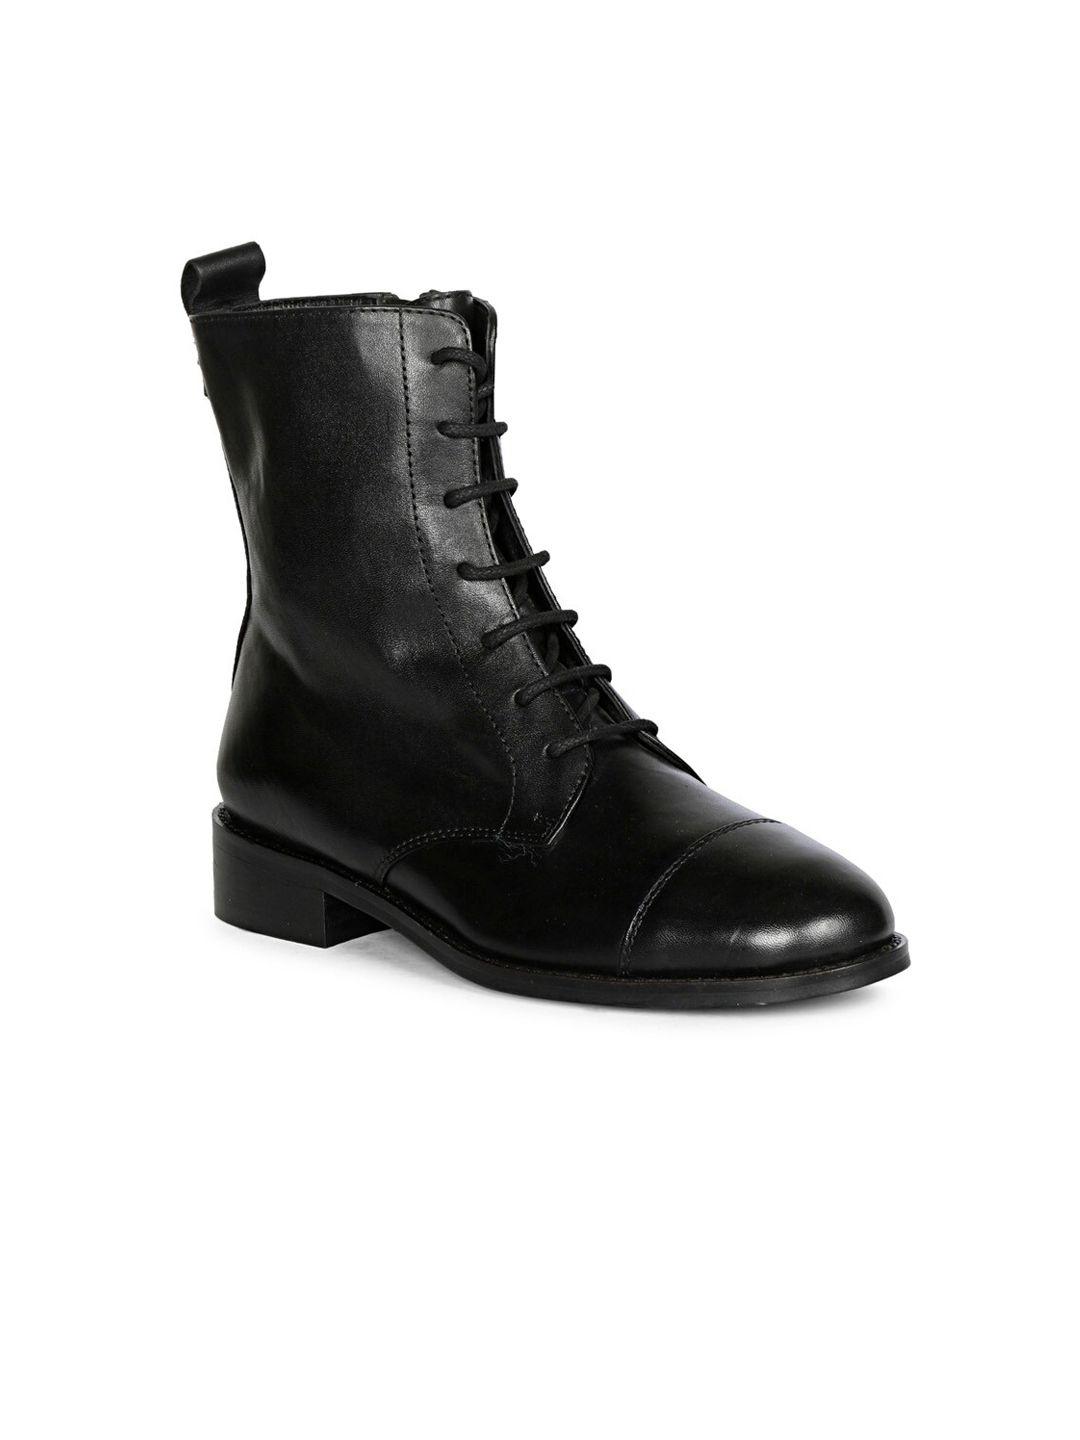 saint-g-women-black-leather-winter-boots